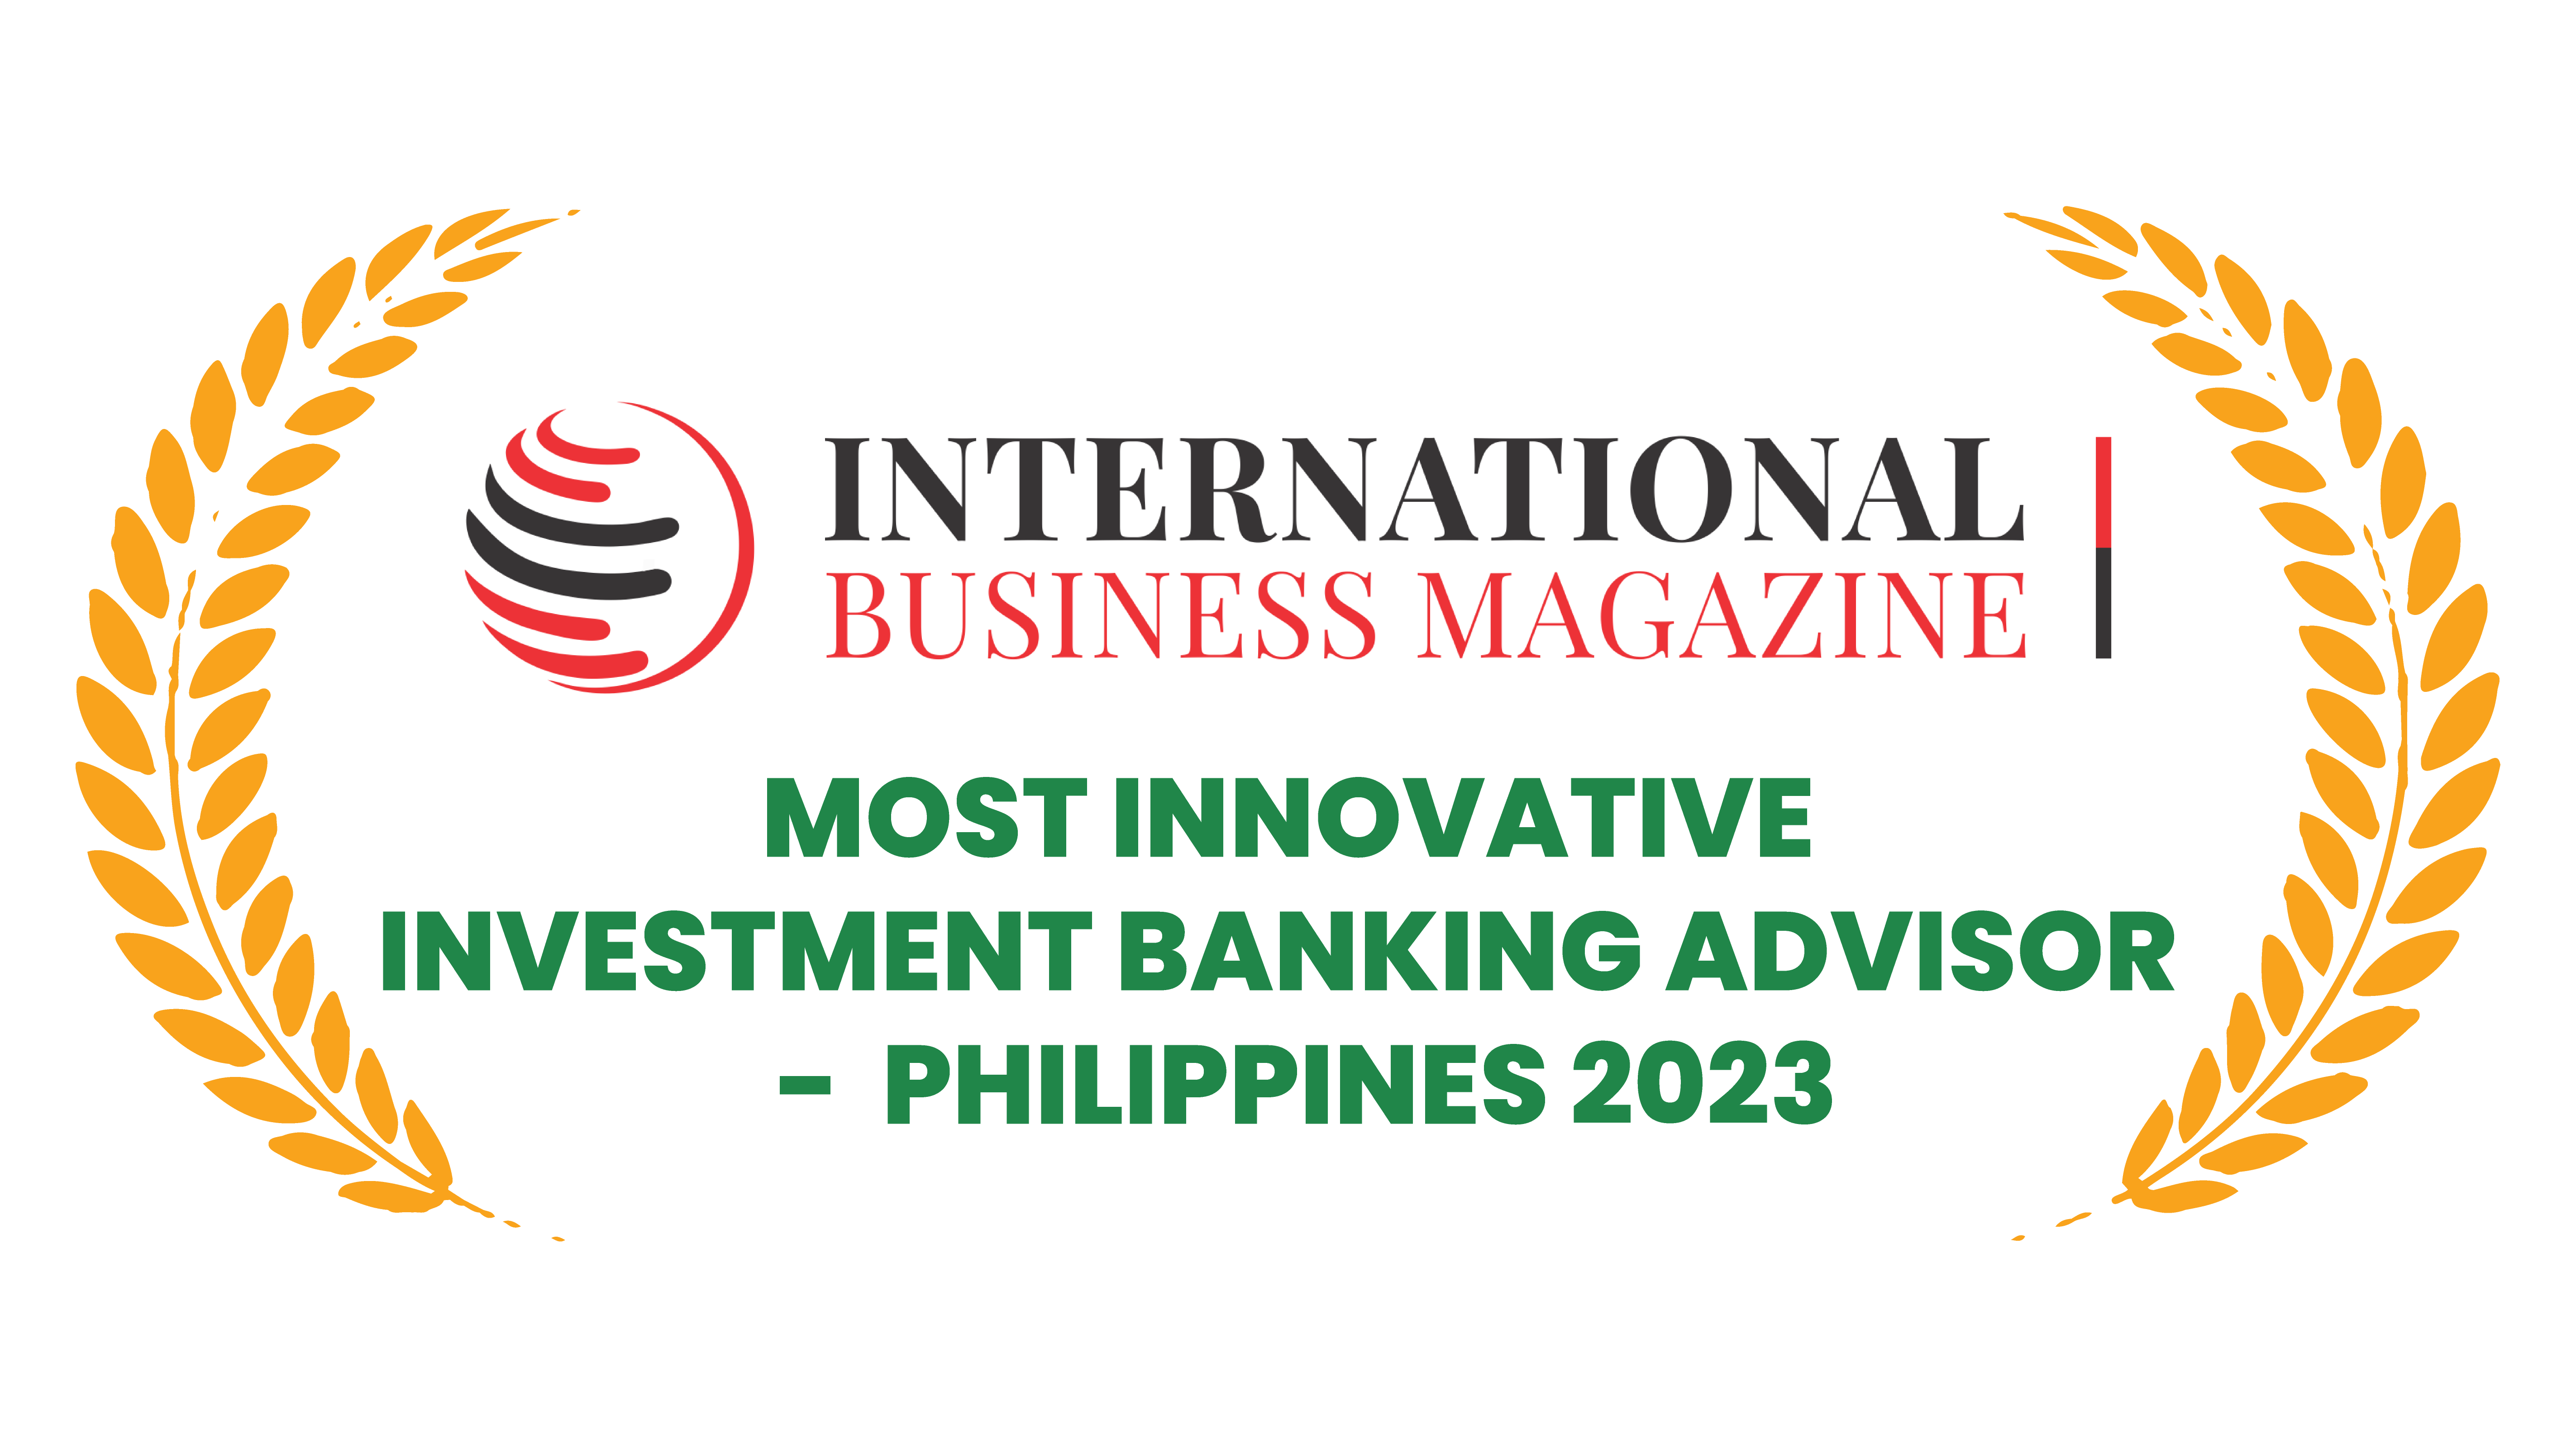 international business magazine - most innovative investment banking advisor 